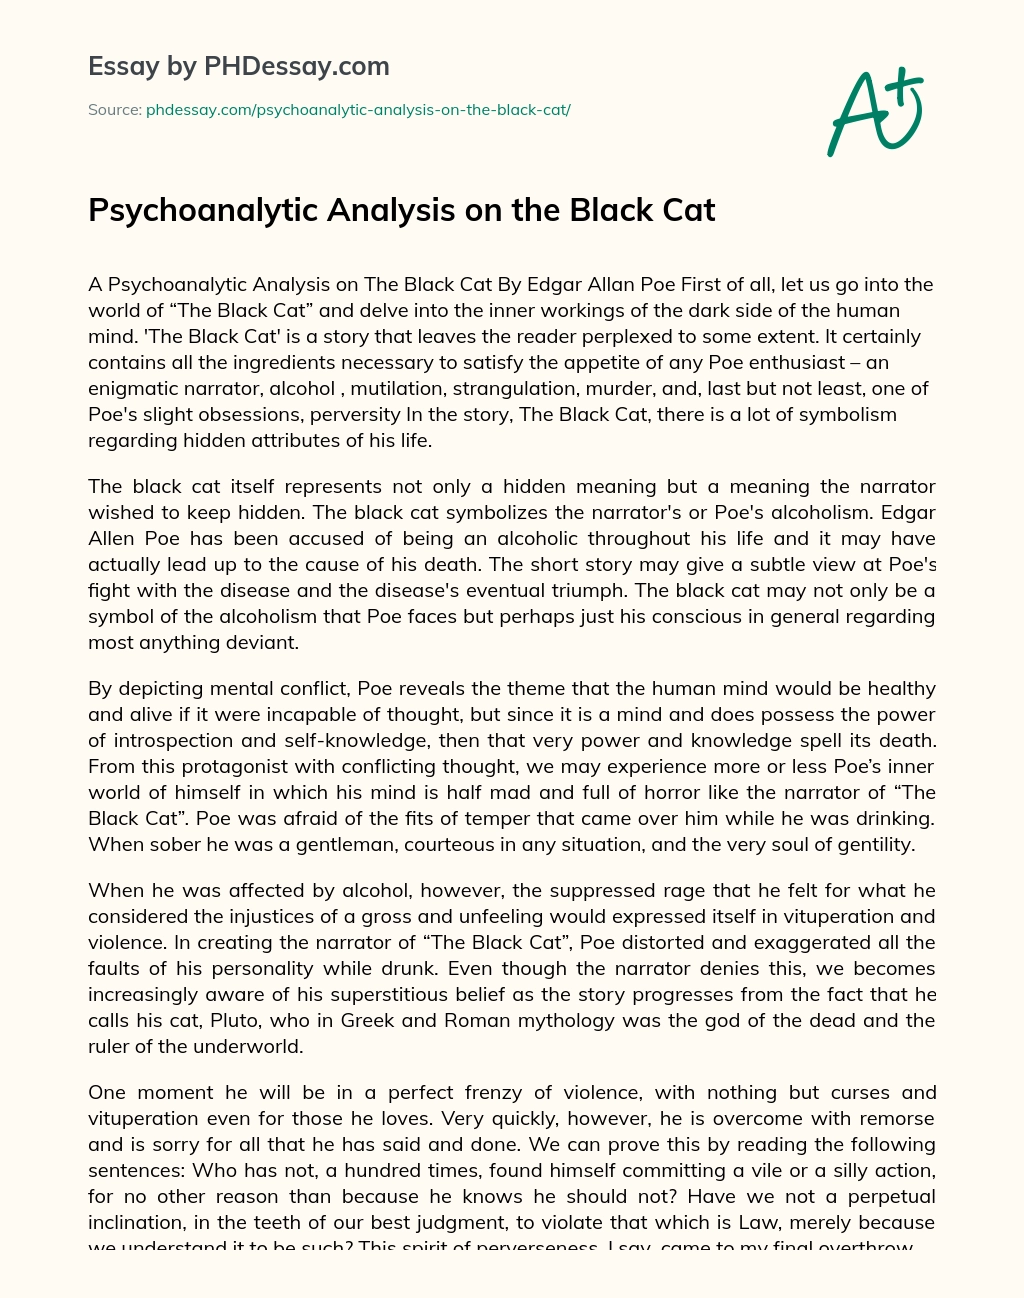 Psychoanalytic Analysis on the Black Cat essay